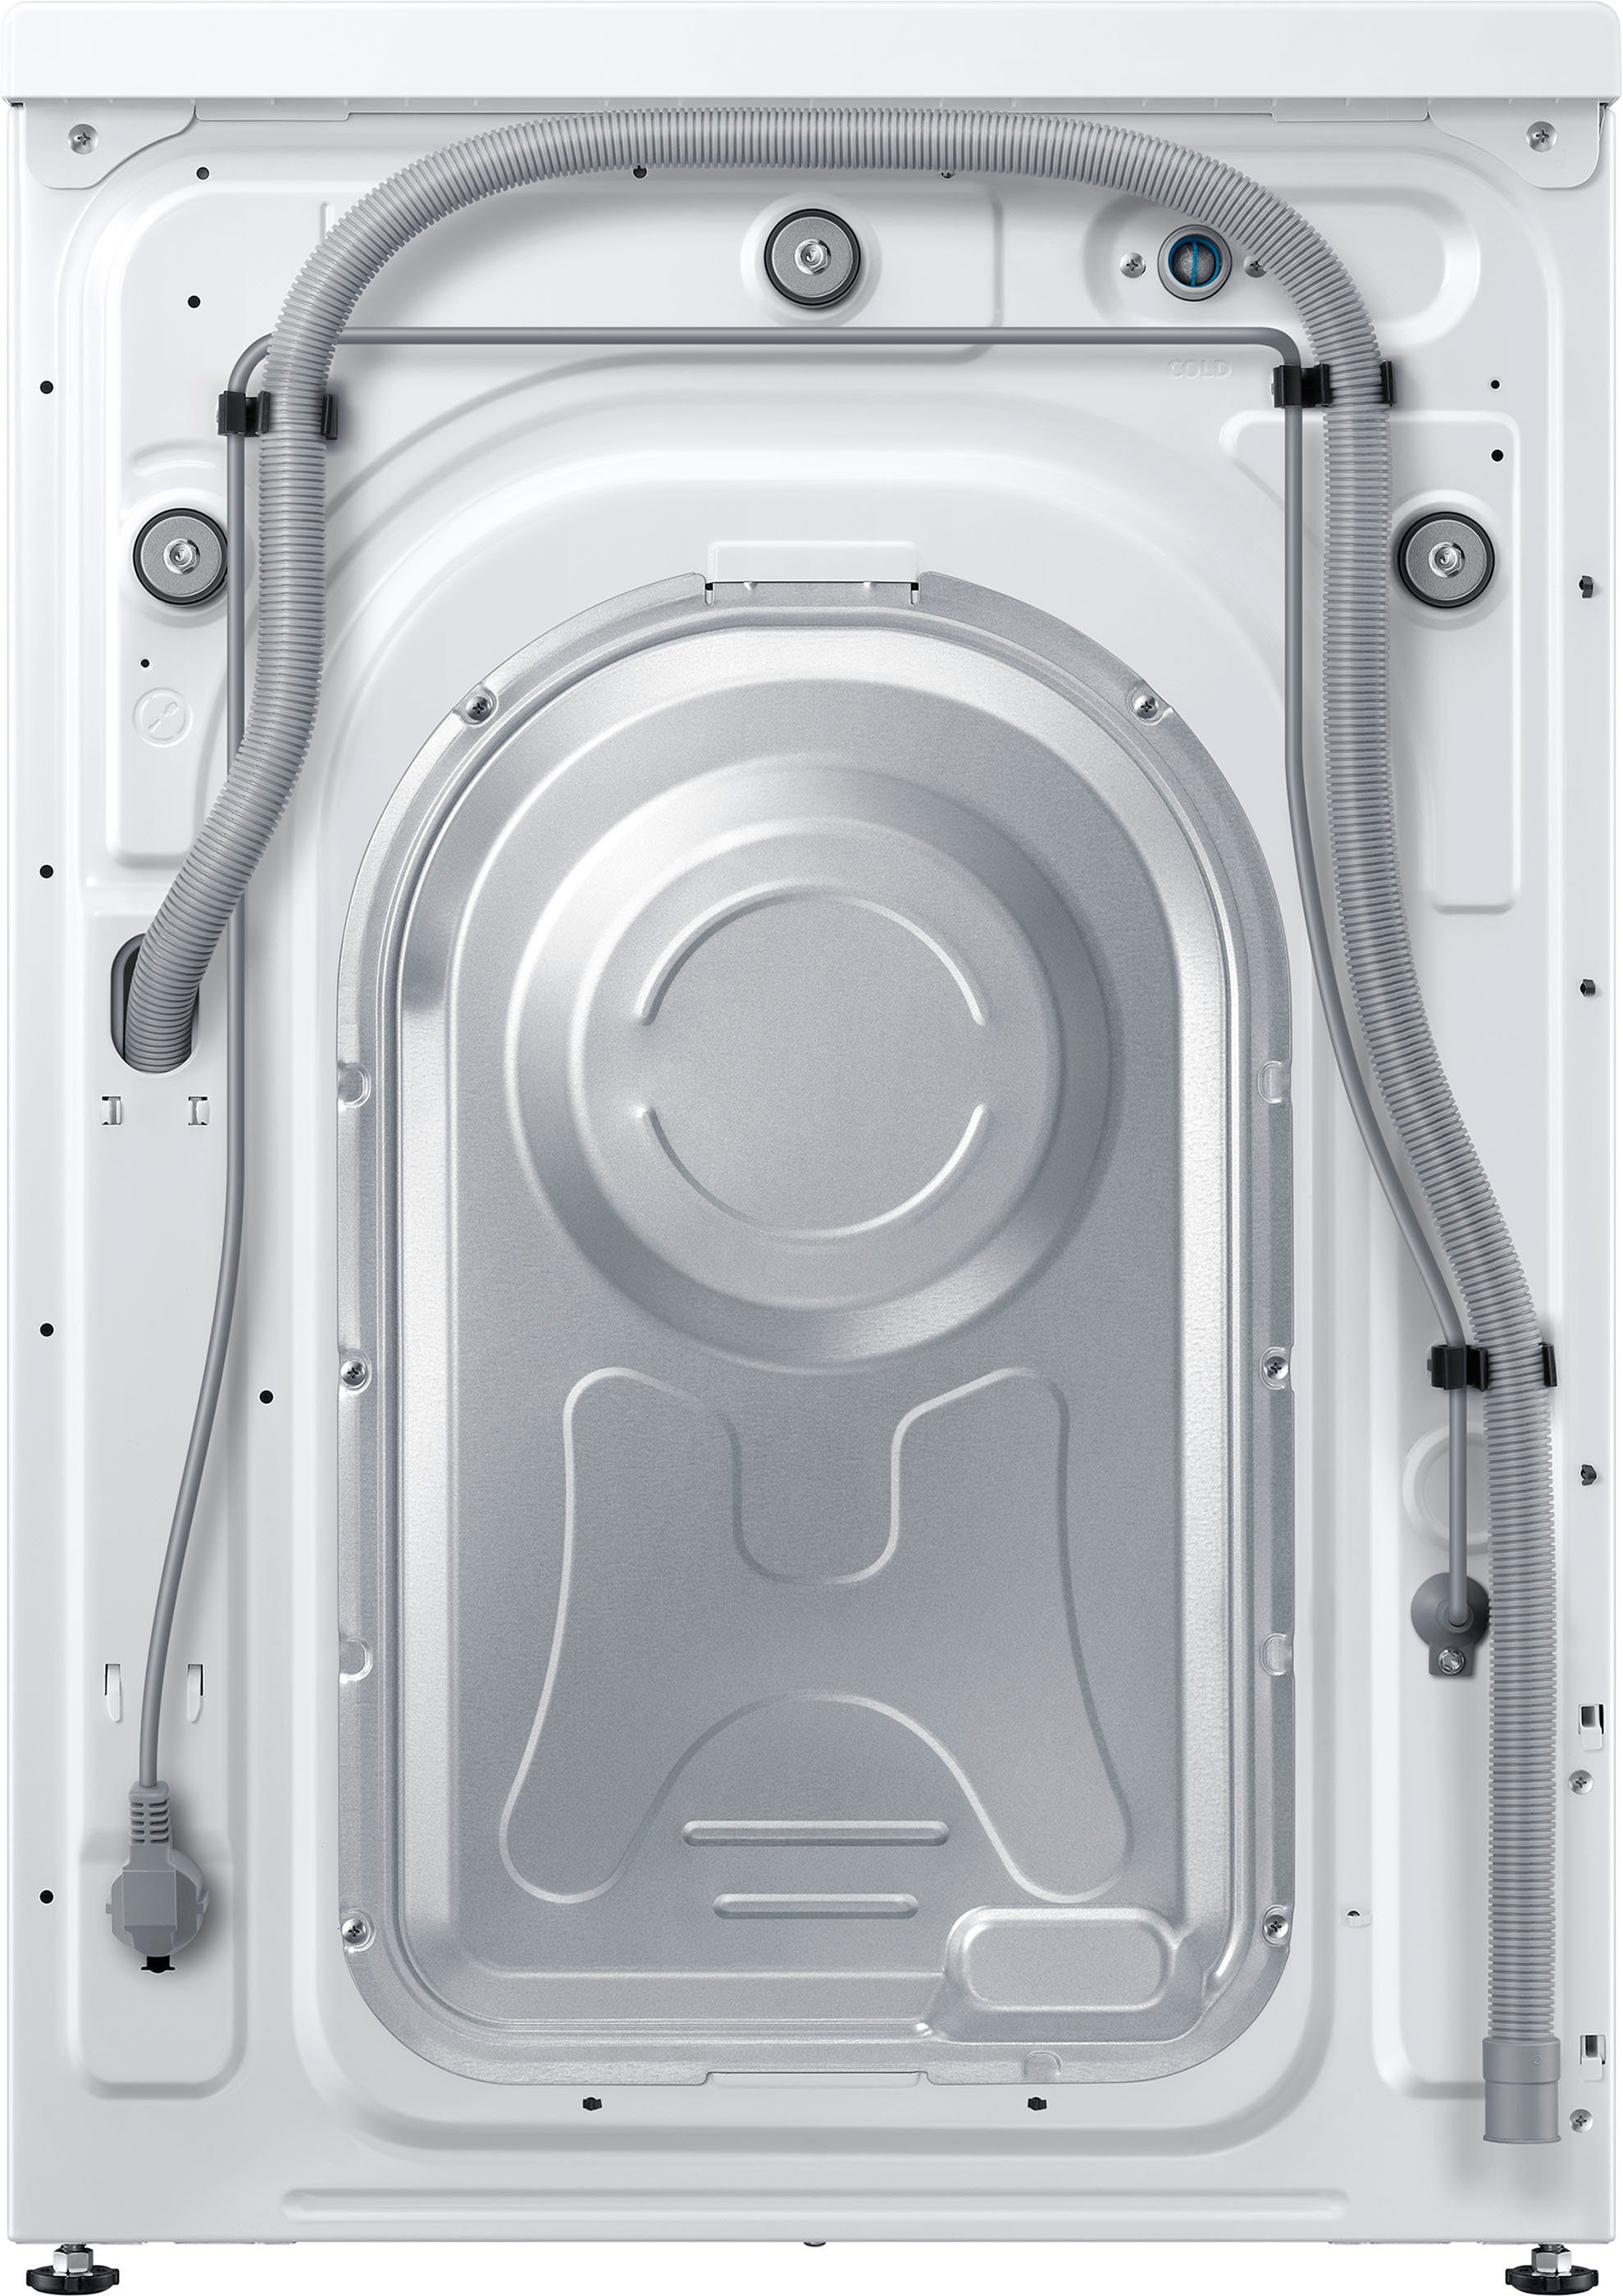 Samsung Waschmaschine WW9800T QuickDrive™ kg, WW91T986ASH, U/min, 9 1600